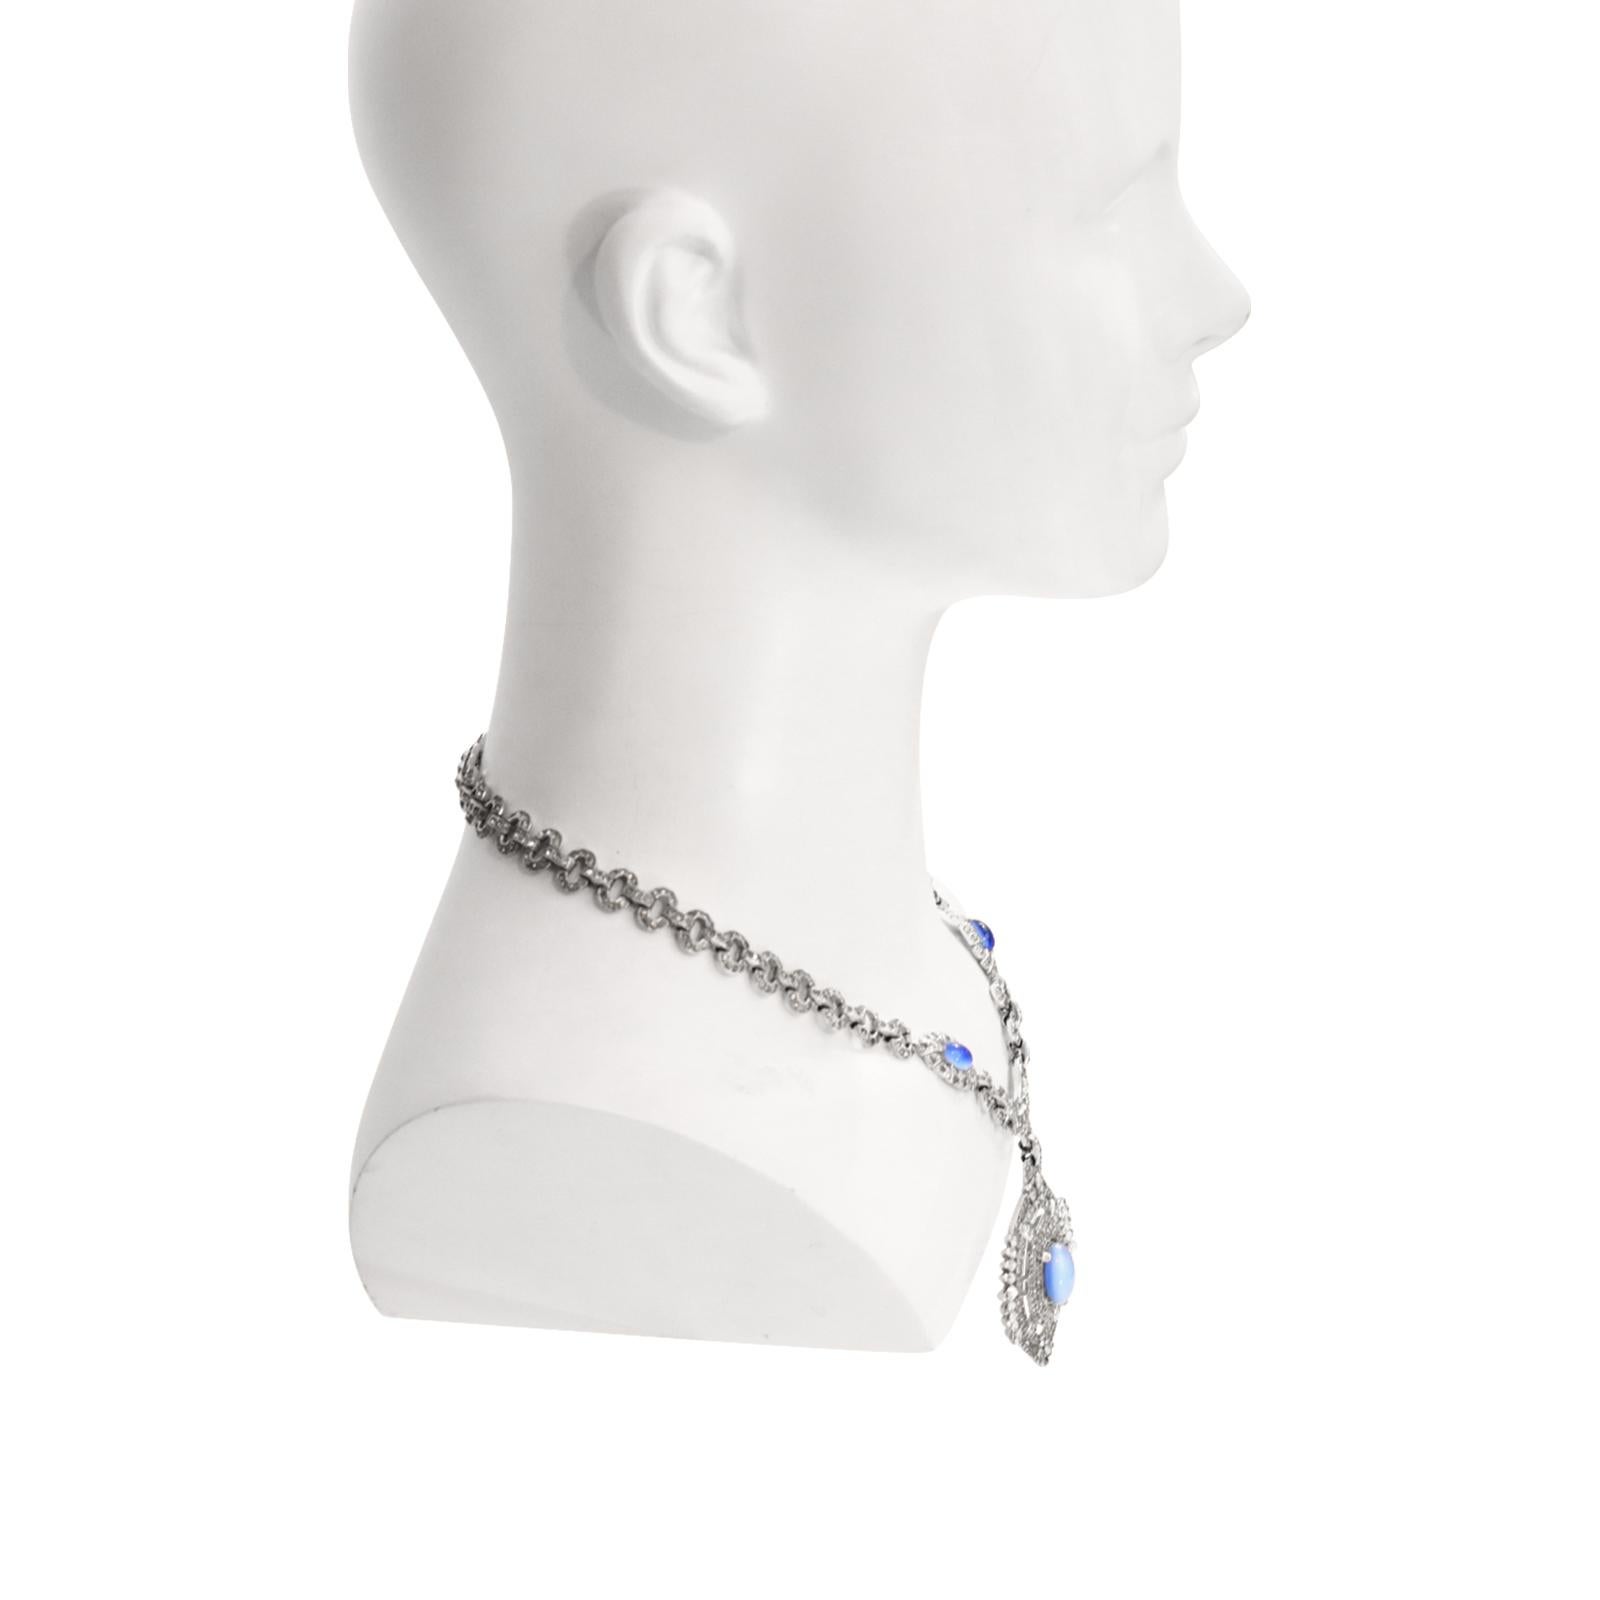 Vintage Diamante with Blue Shiny Cabochon Dangling Pendant Necklace, circa 1960s For Sale 3